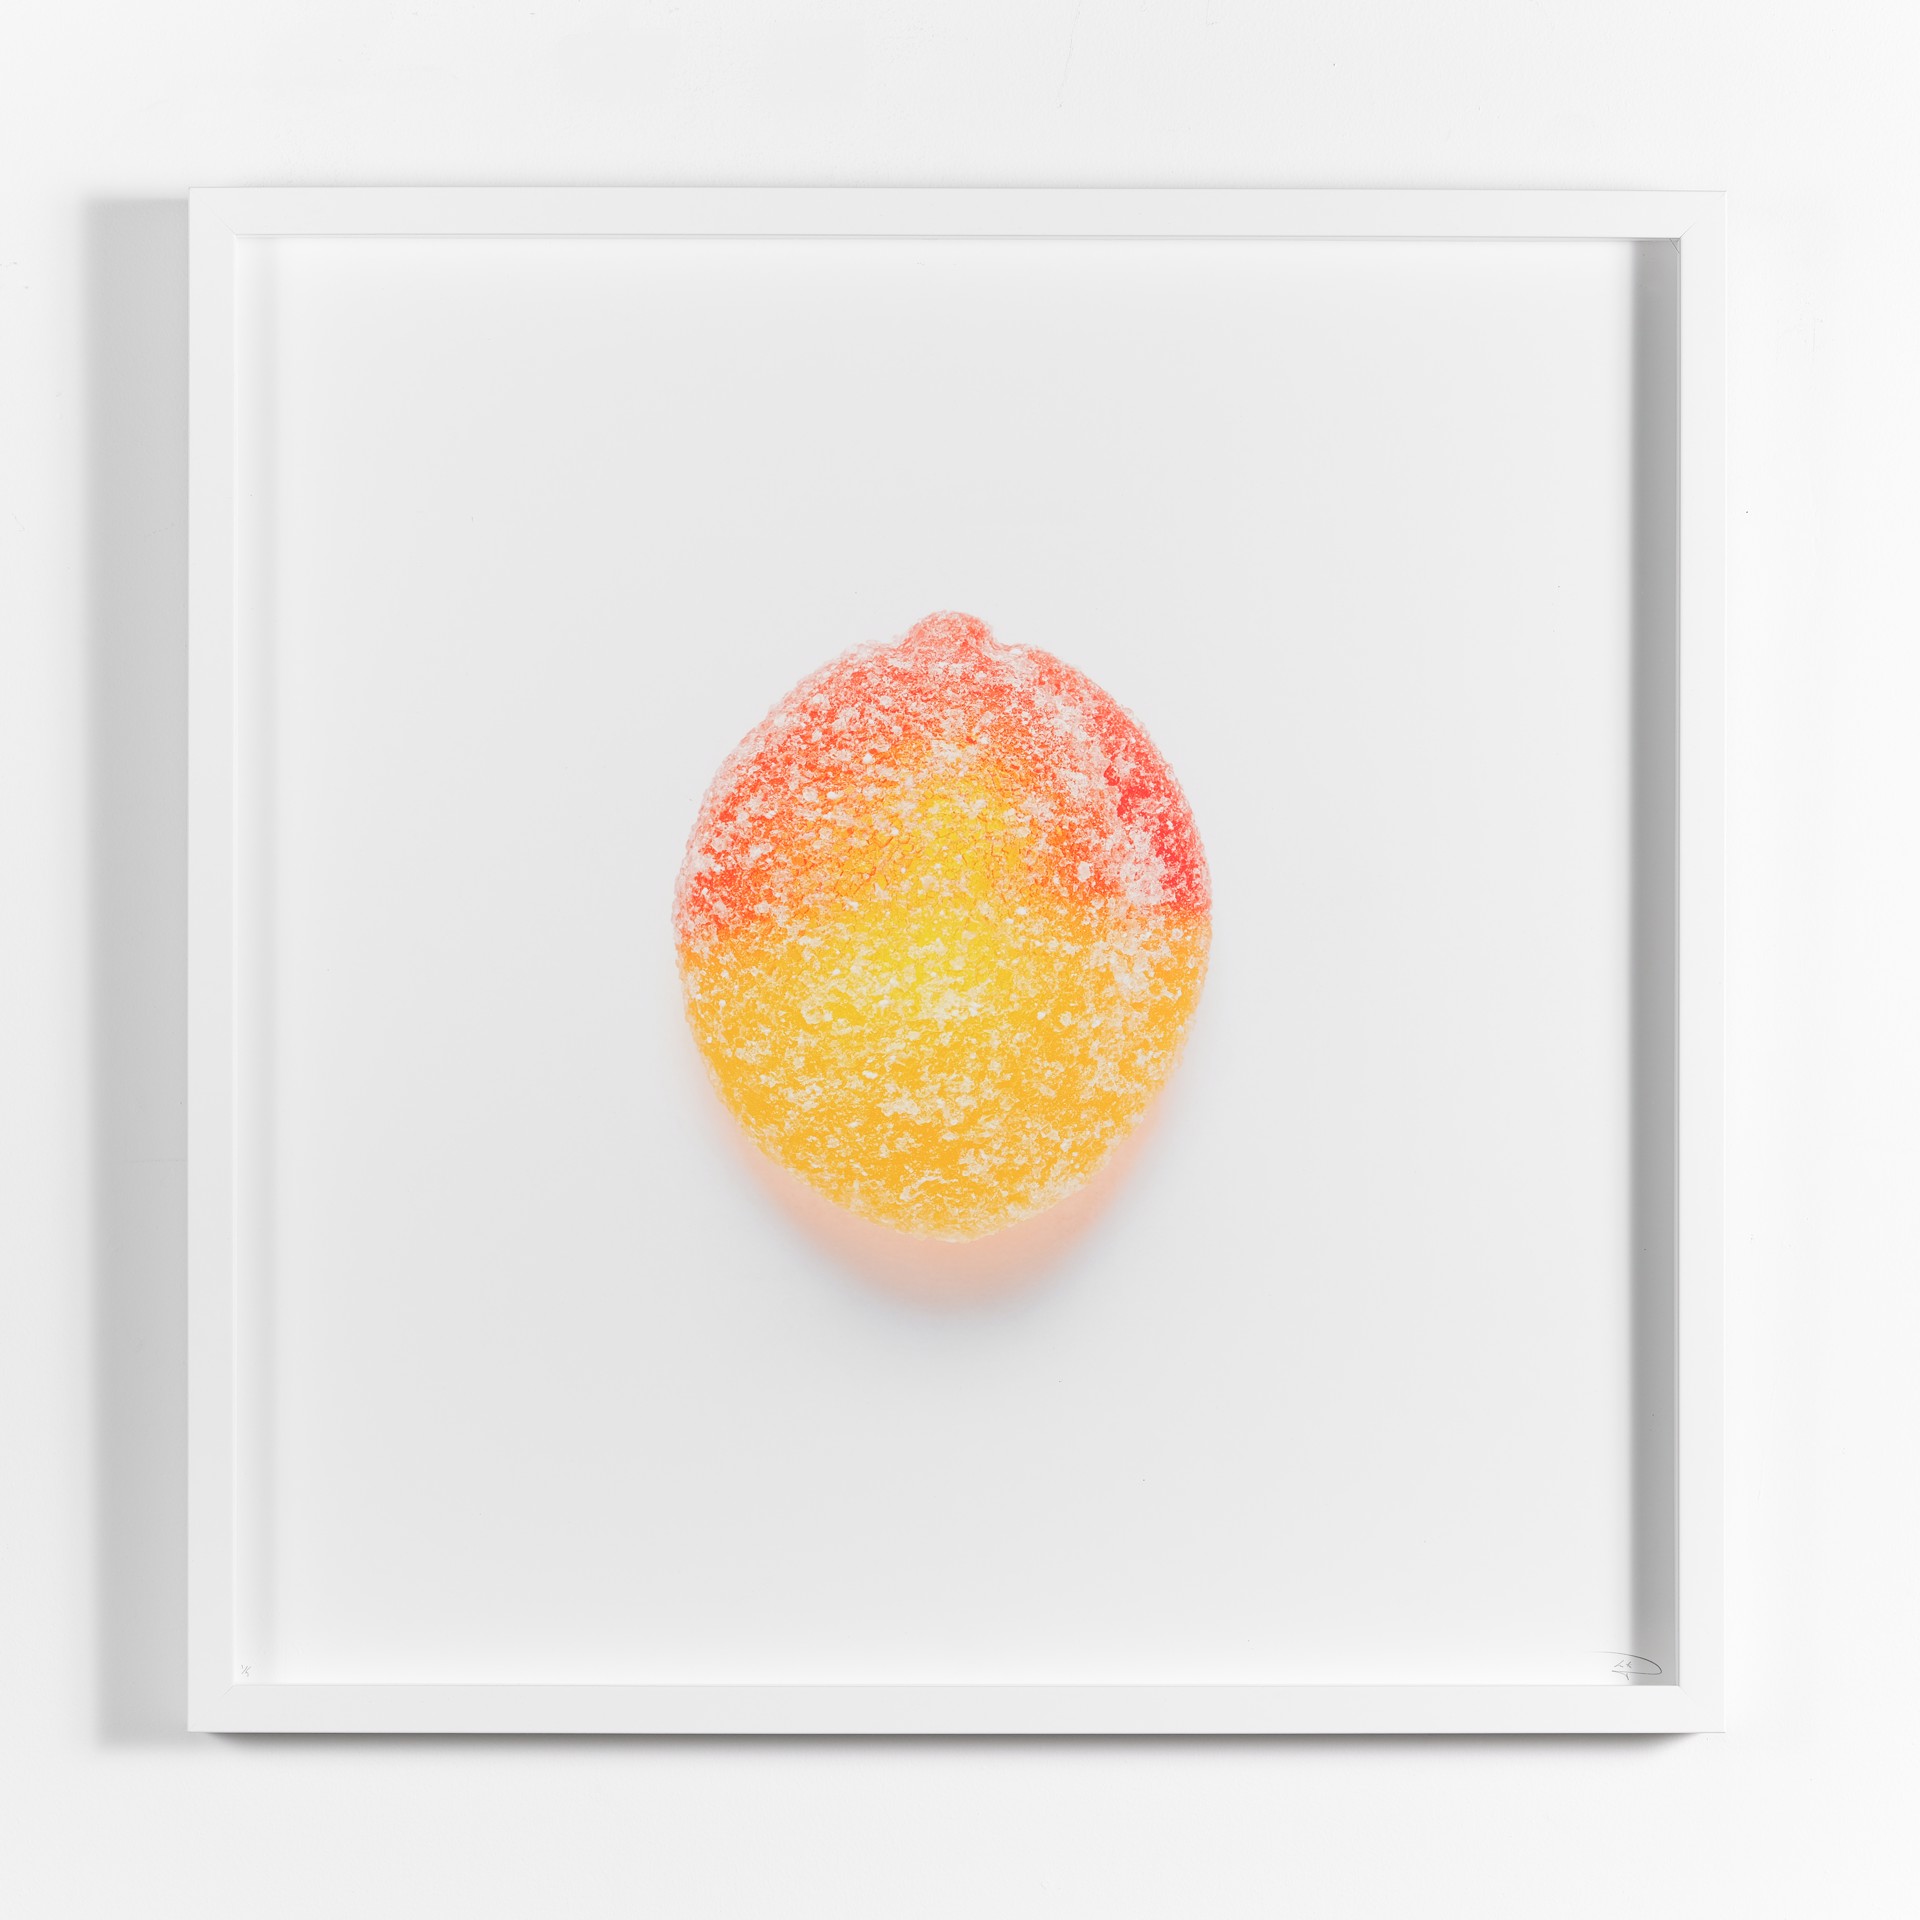 Fuzzy Peach by Peter Andrew Lusztyk / Refined Sugar